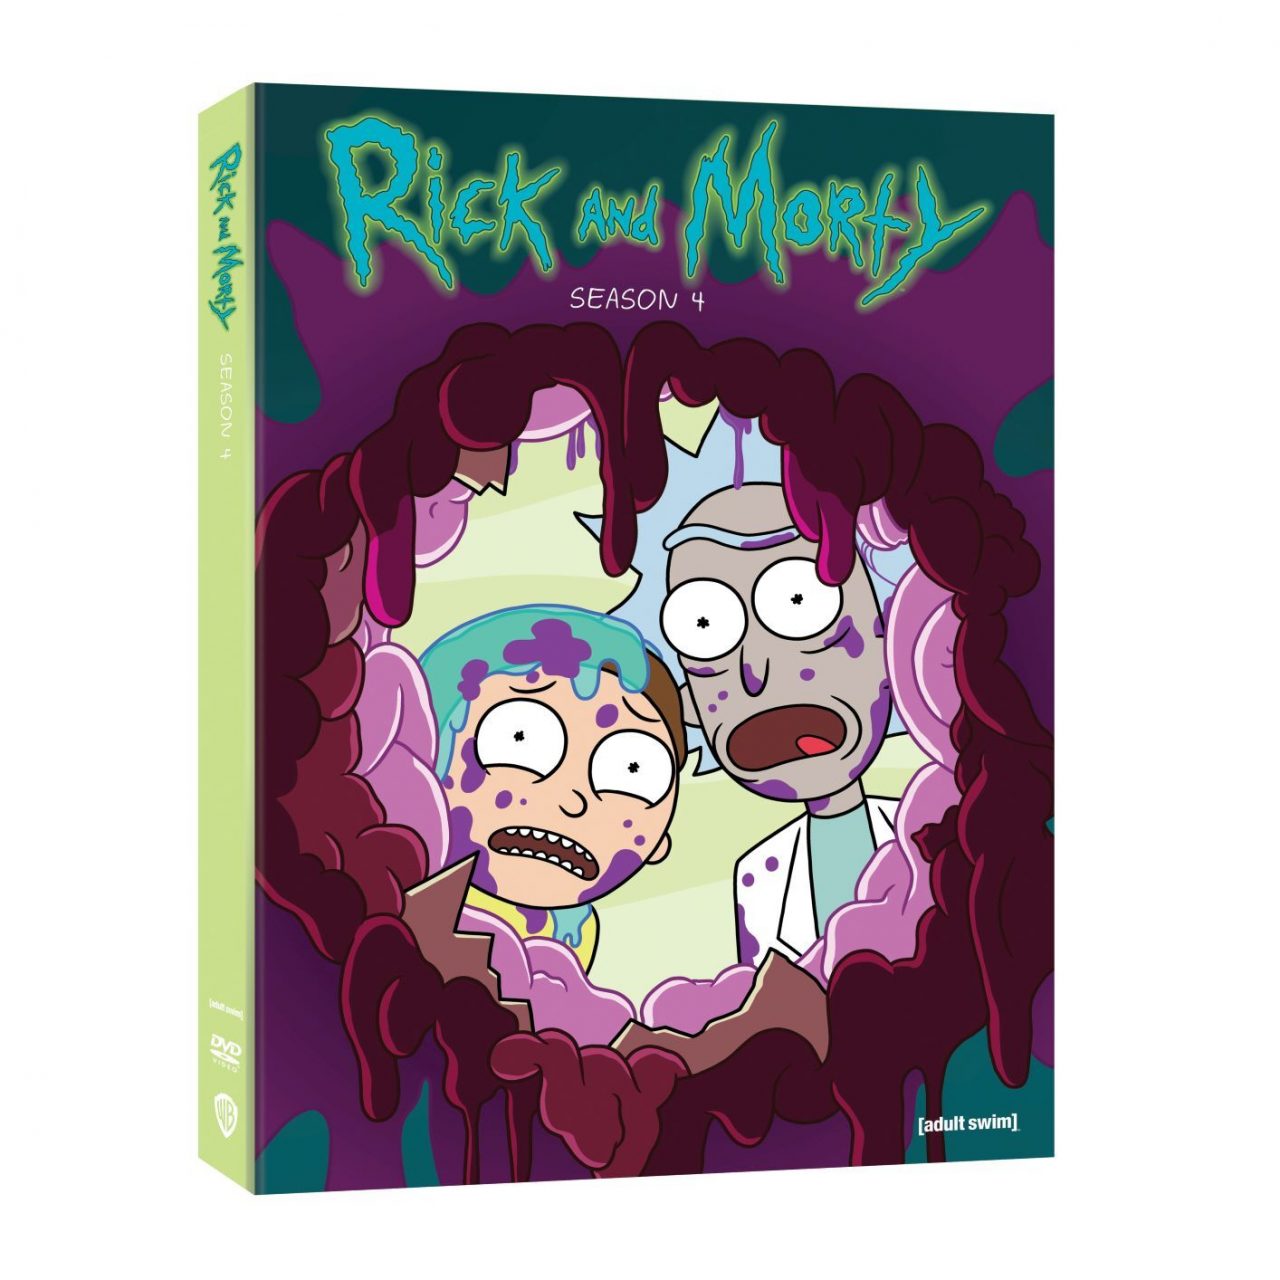 Rick And Morty Season 4 Blu-Ray cover (Warner Bros. Home Entertainment)